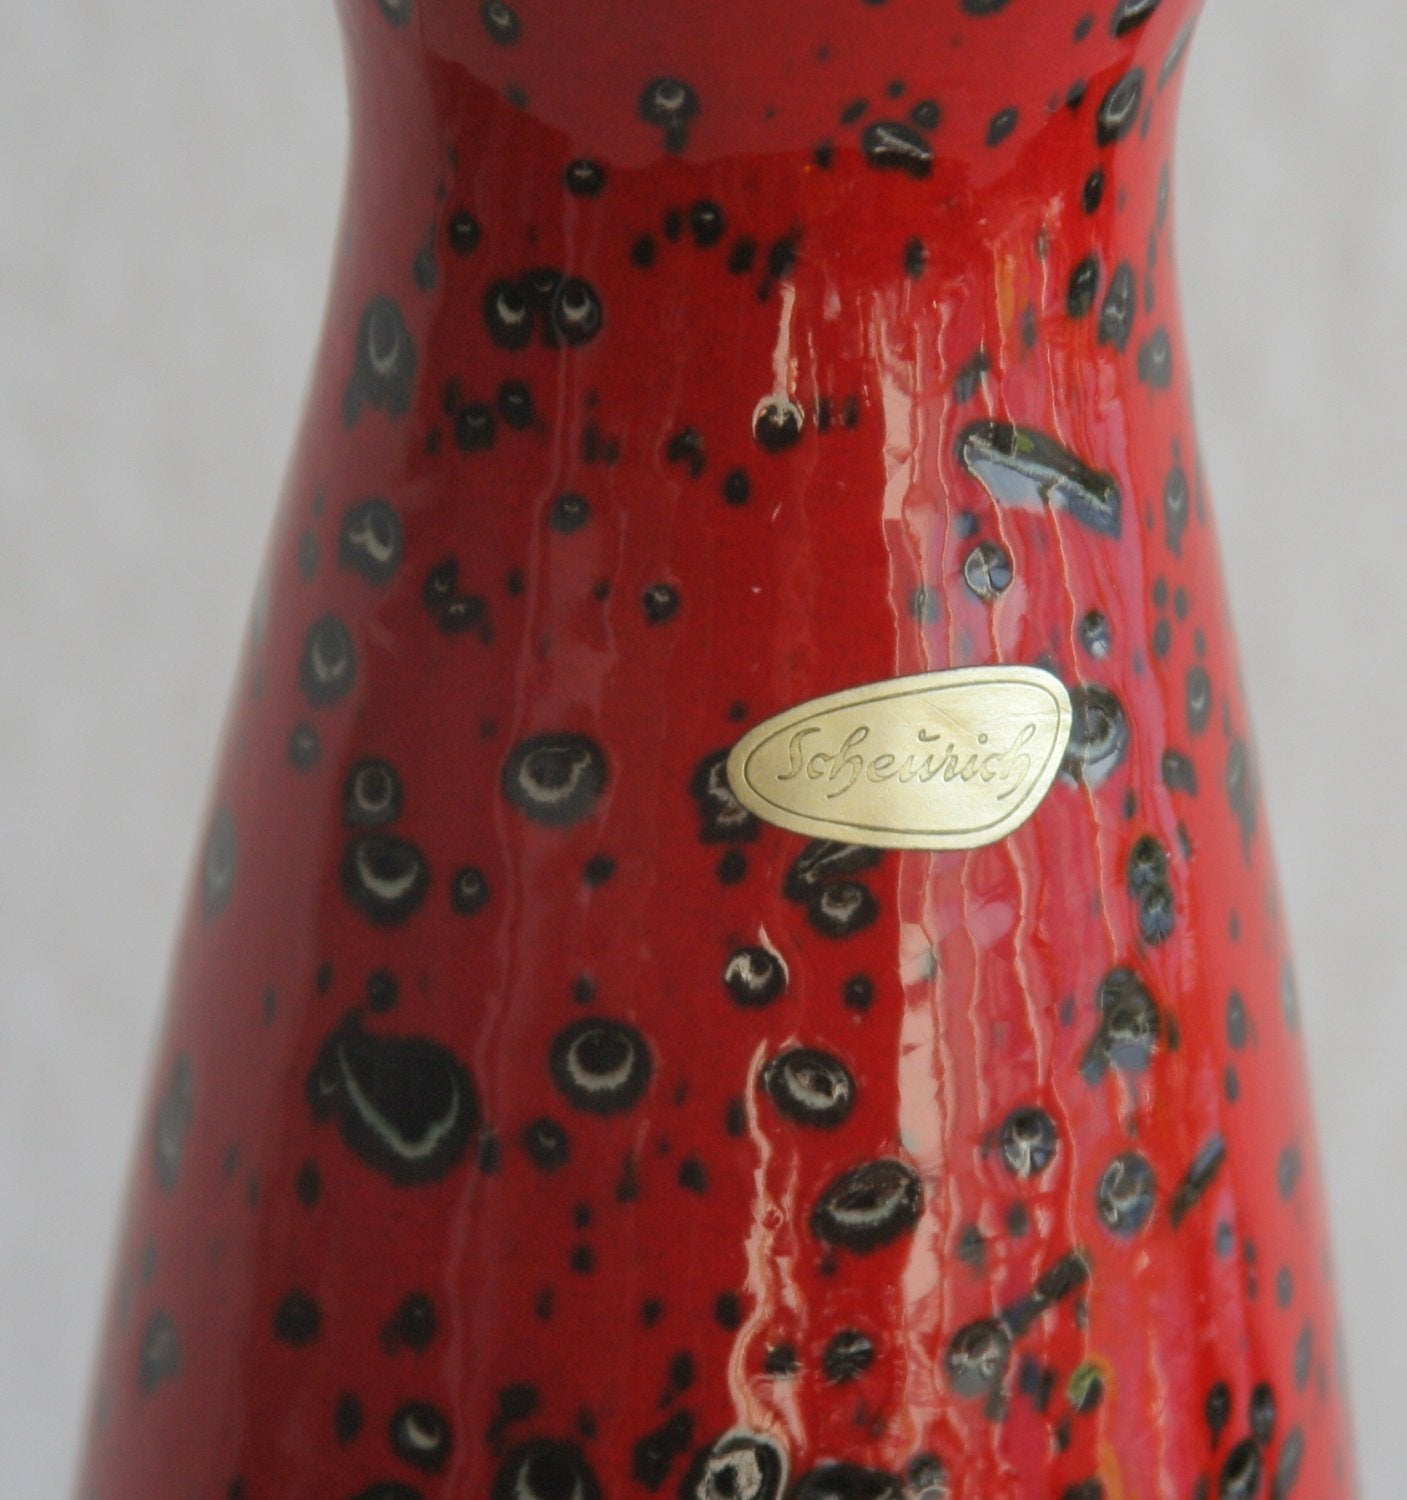 SCHEURICH Pop Art Black Spotted Flaming Red Glazed Ceramic Vase Mollaris.com 